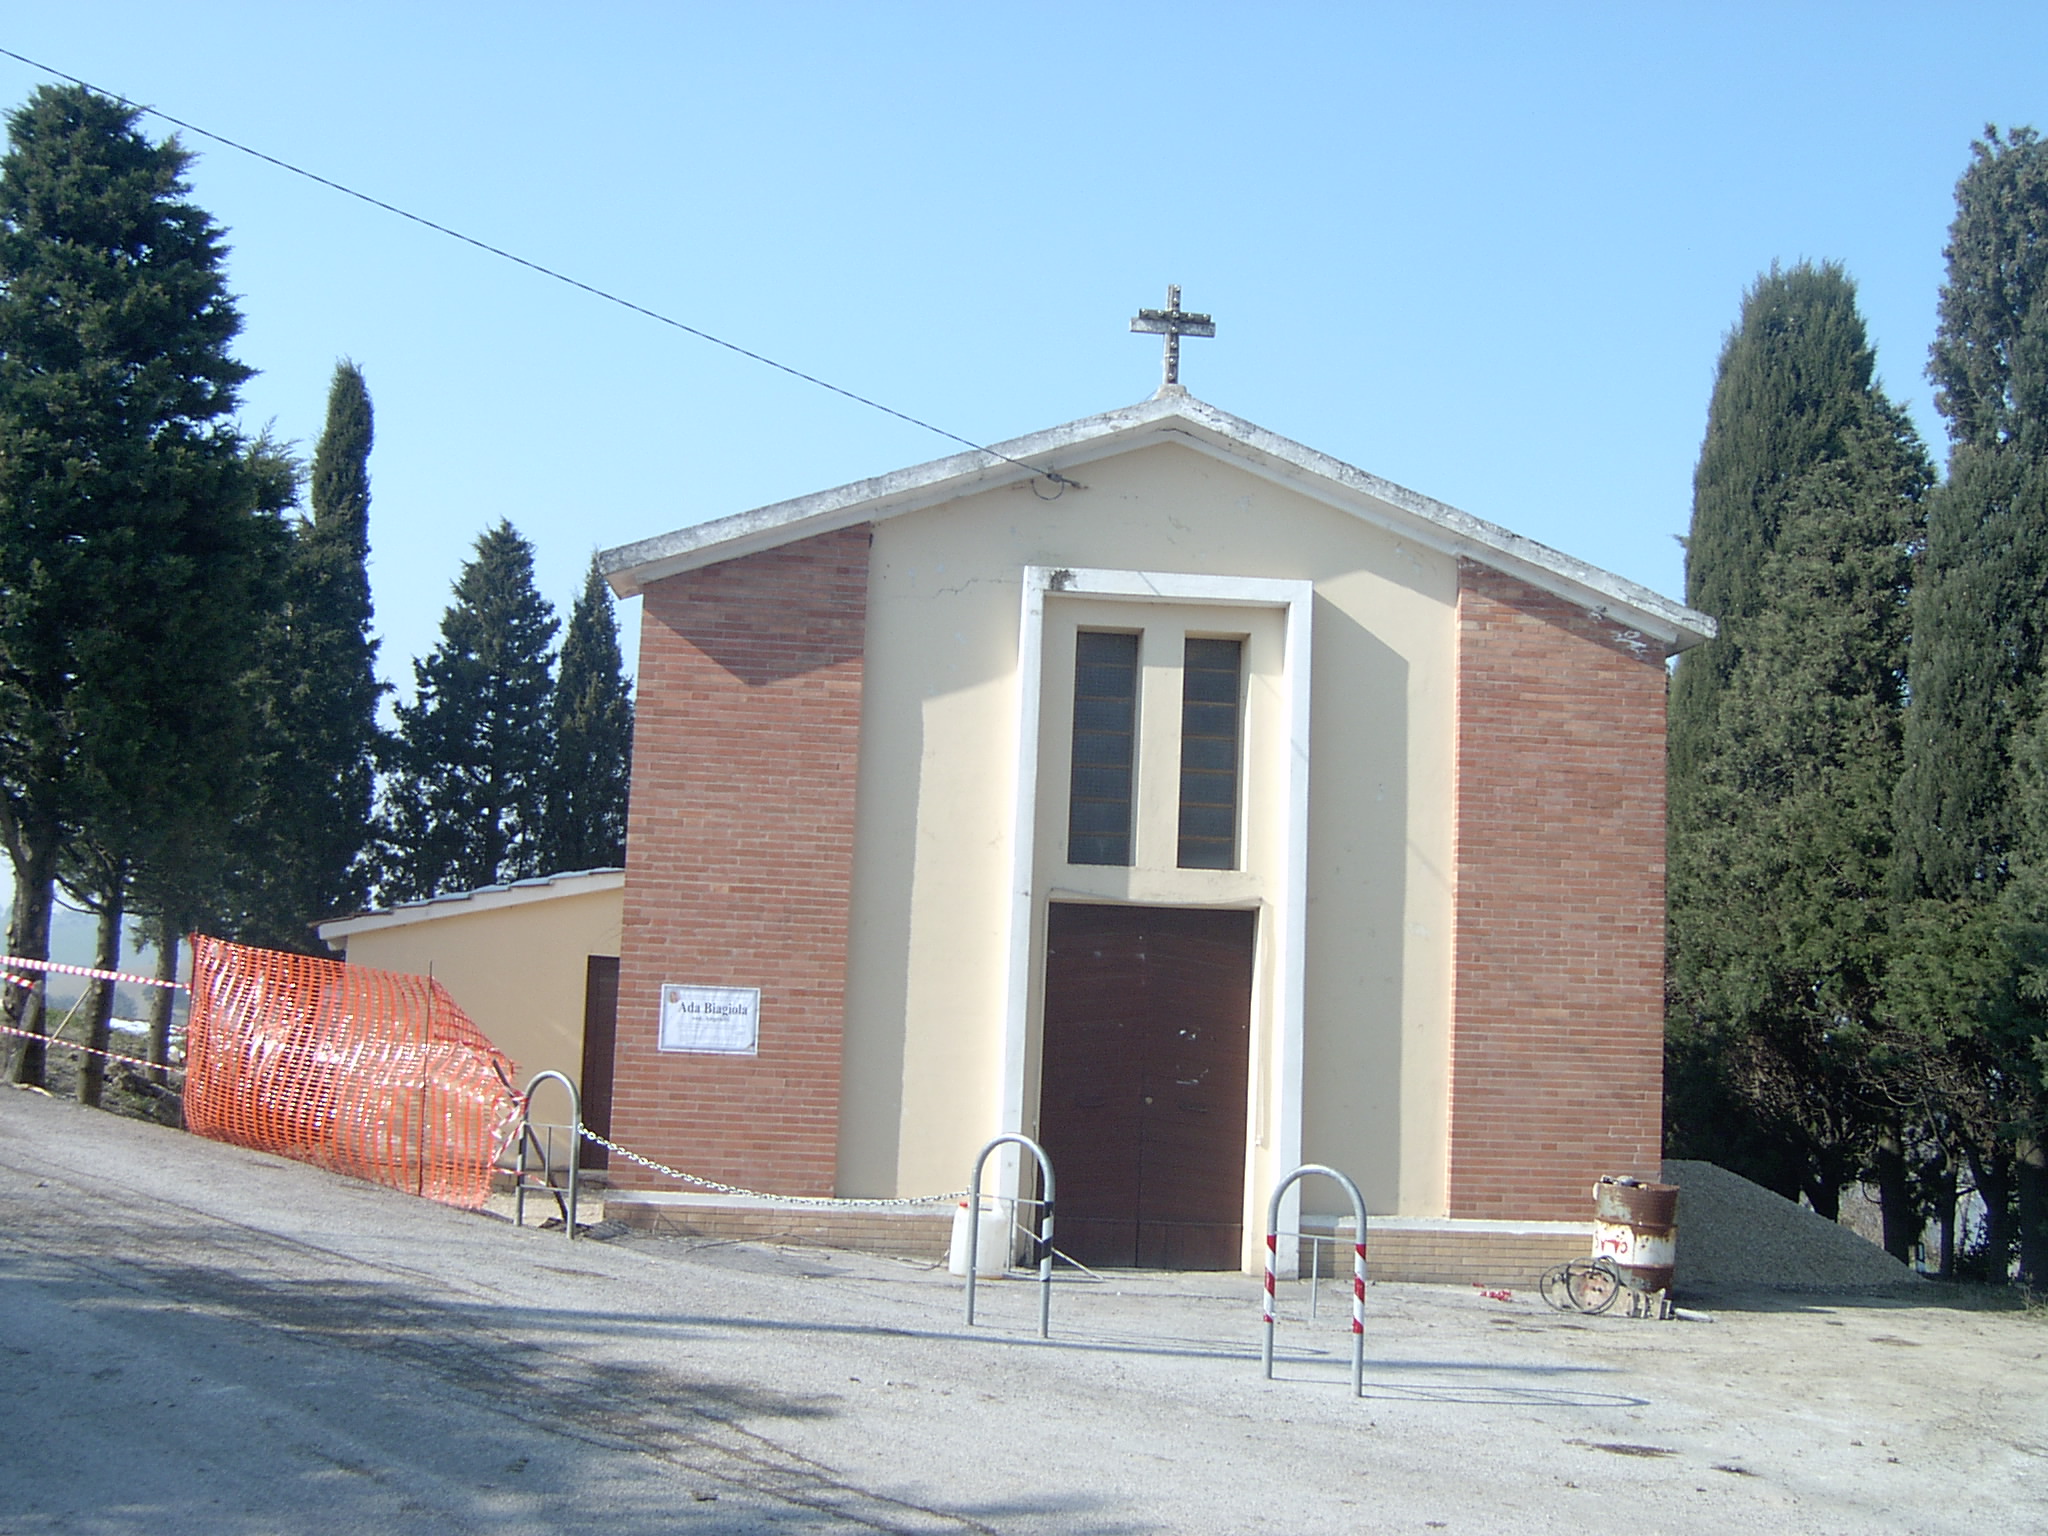 Chiesa di S. Isidoro (chiesa, rurale) - Macerata (MC) 